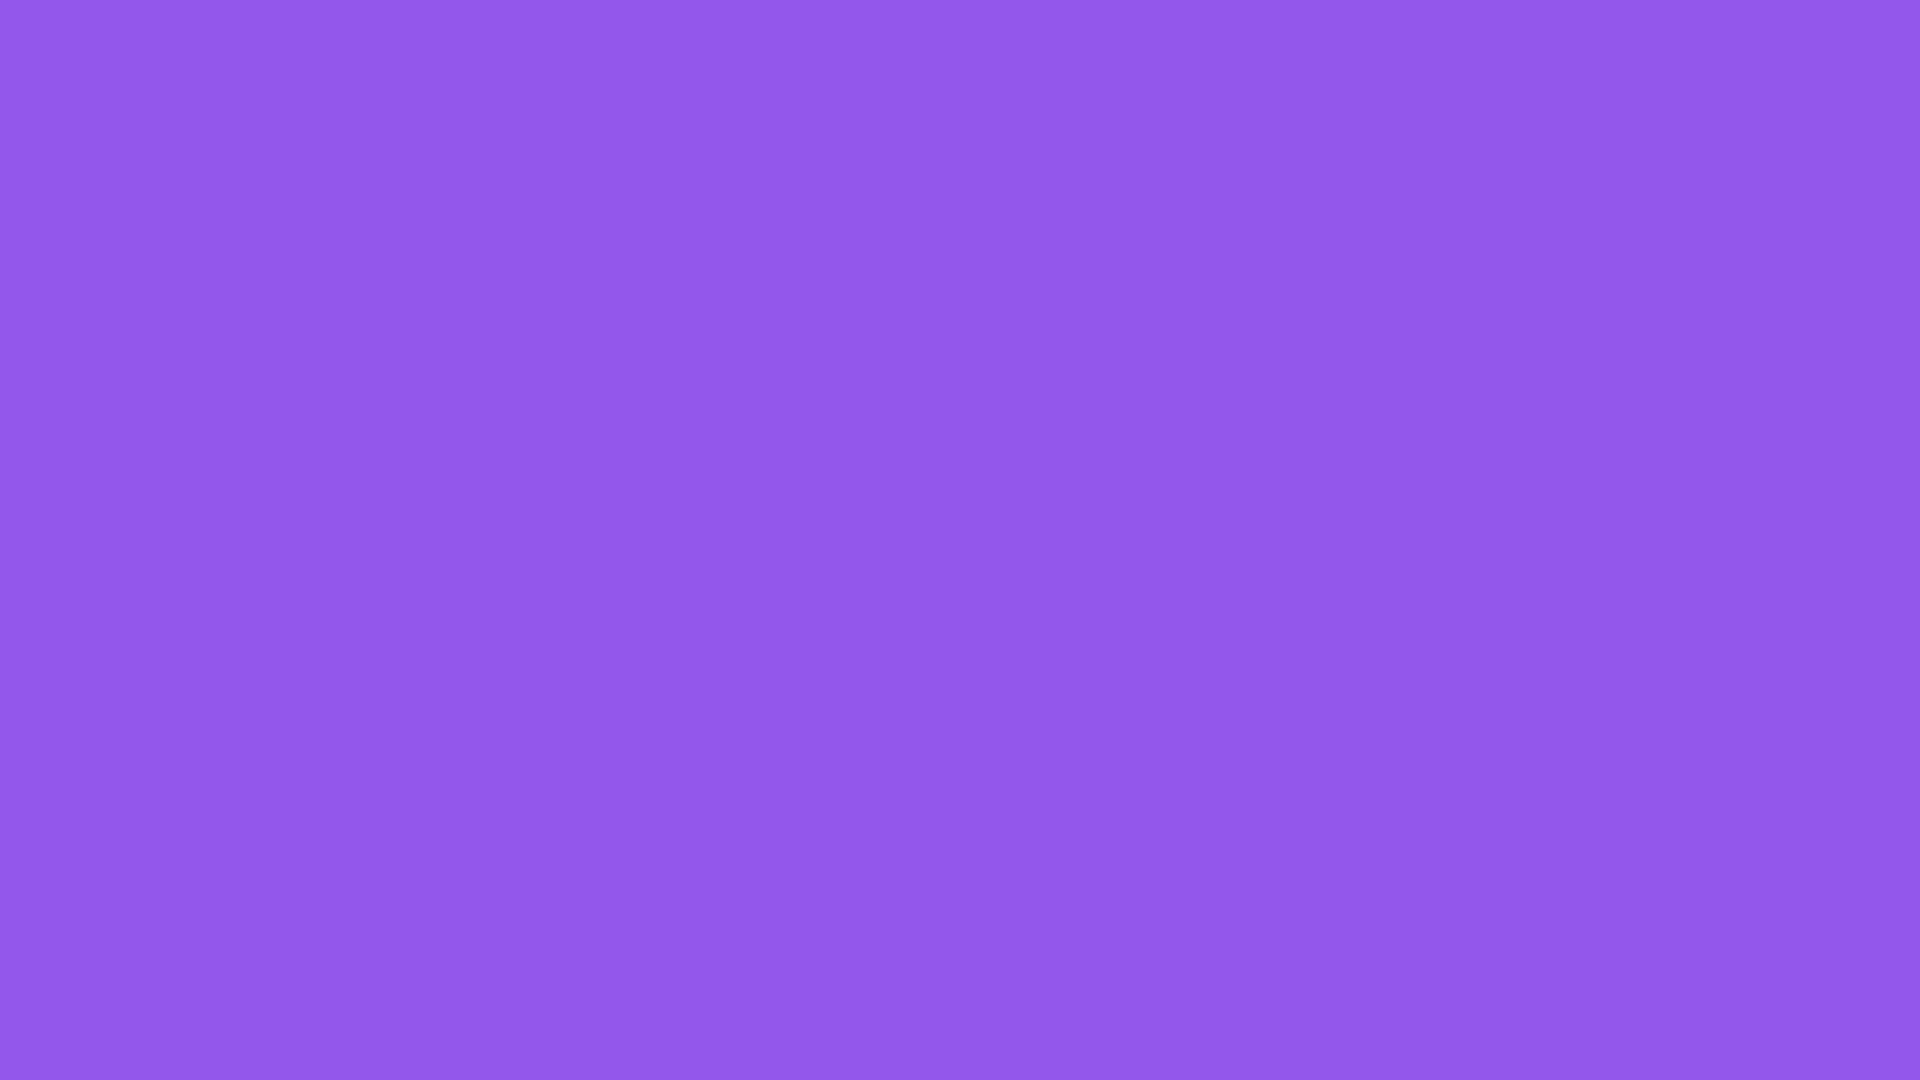 1920x1080 Lavender Indigo Solid Color Background